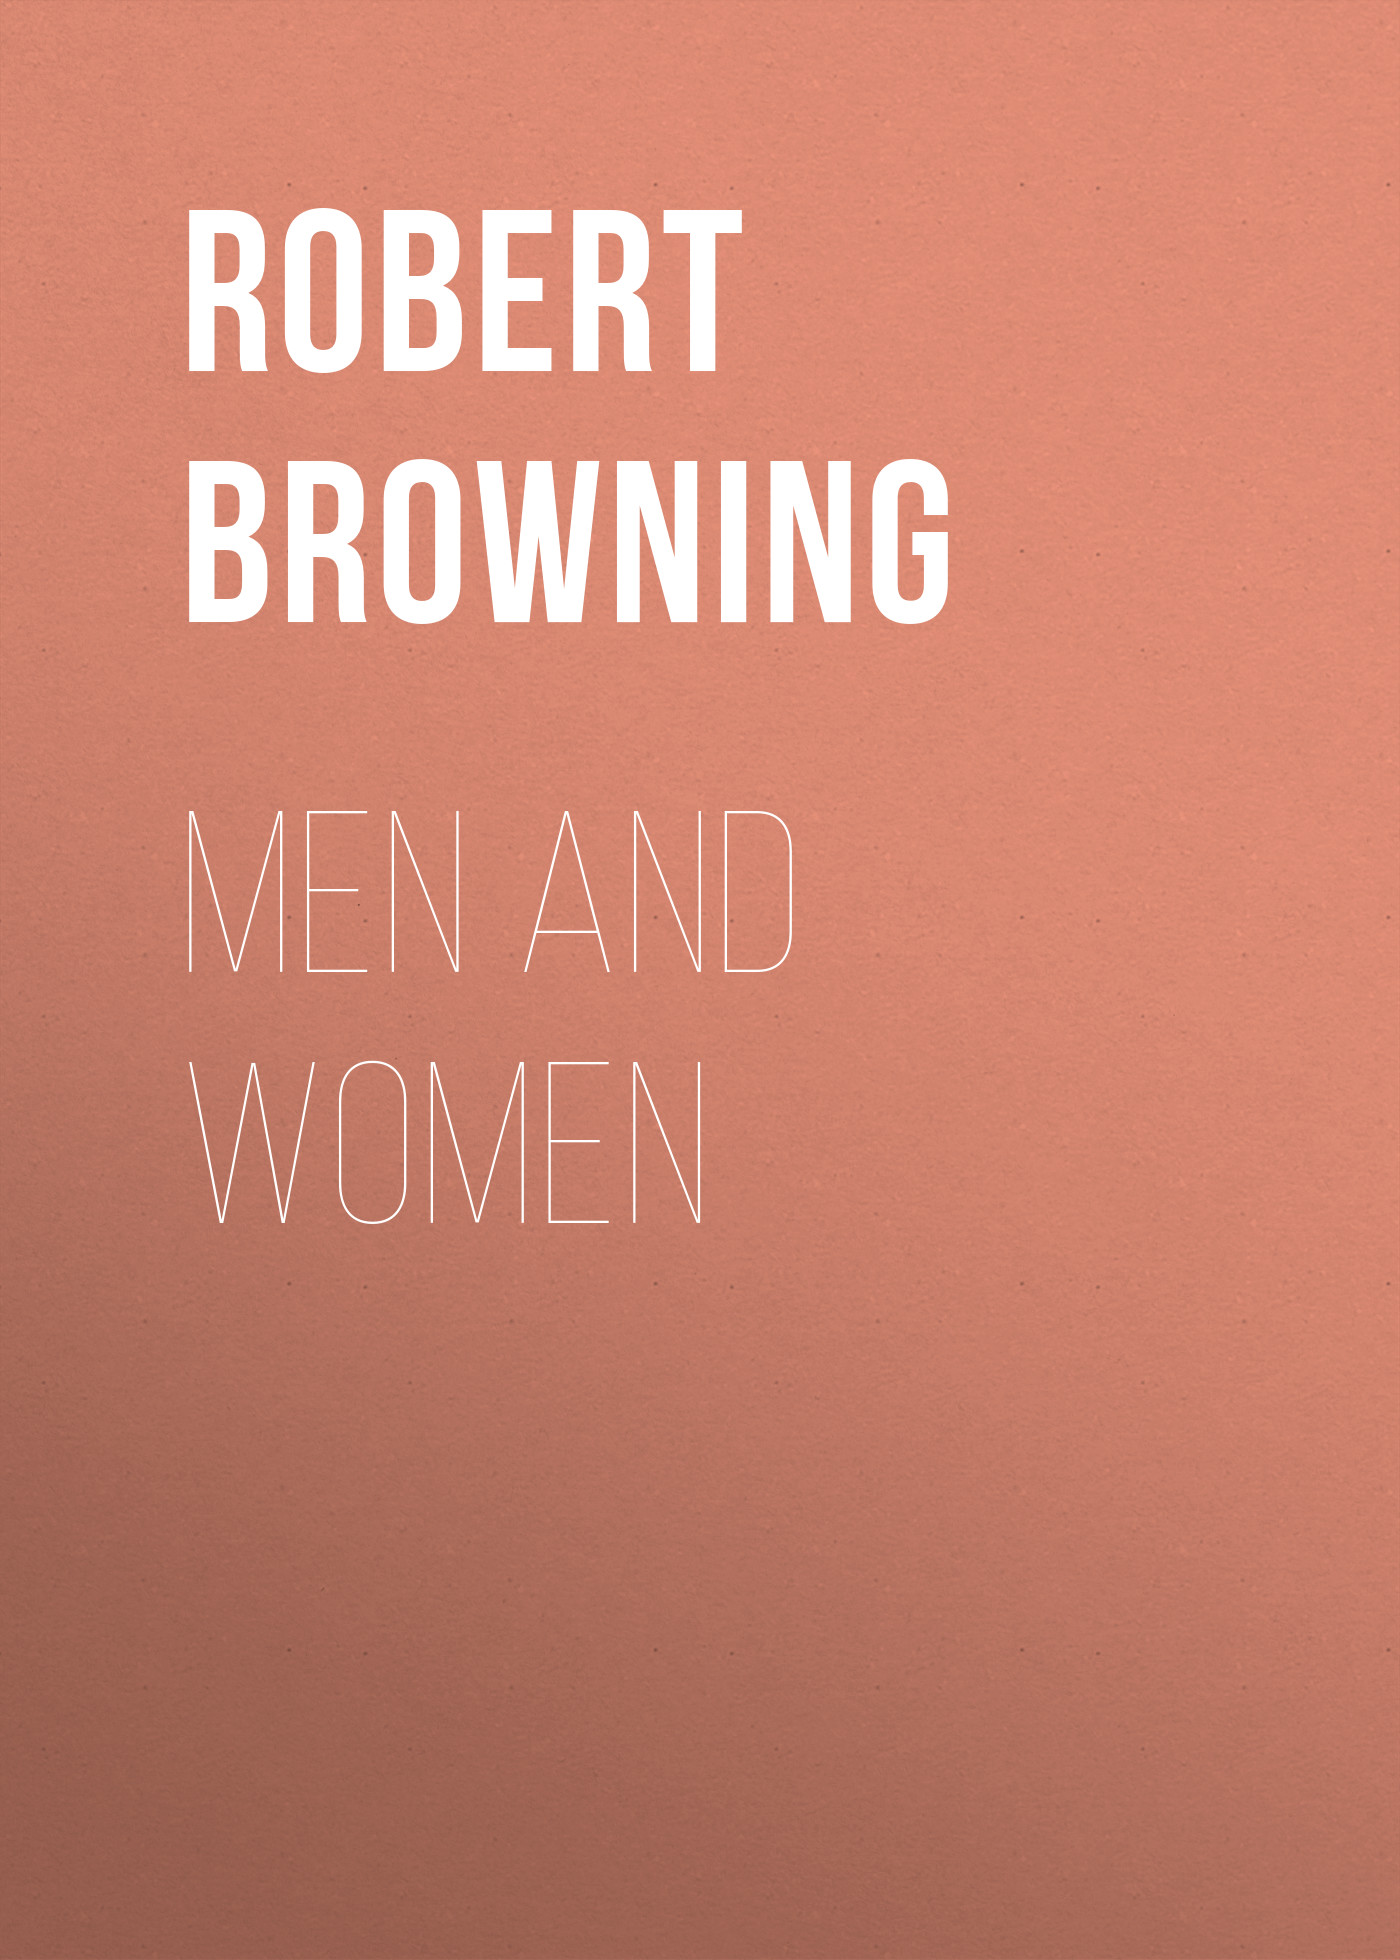 Robert Browning Men and Women